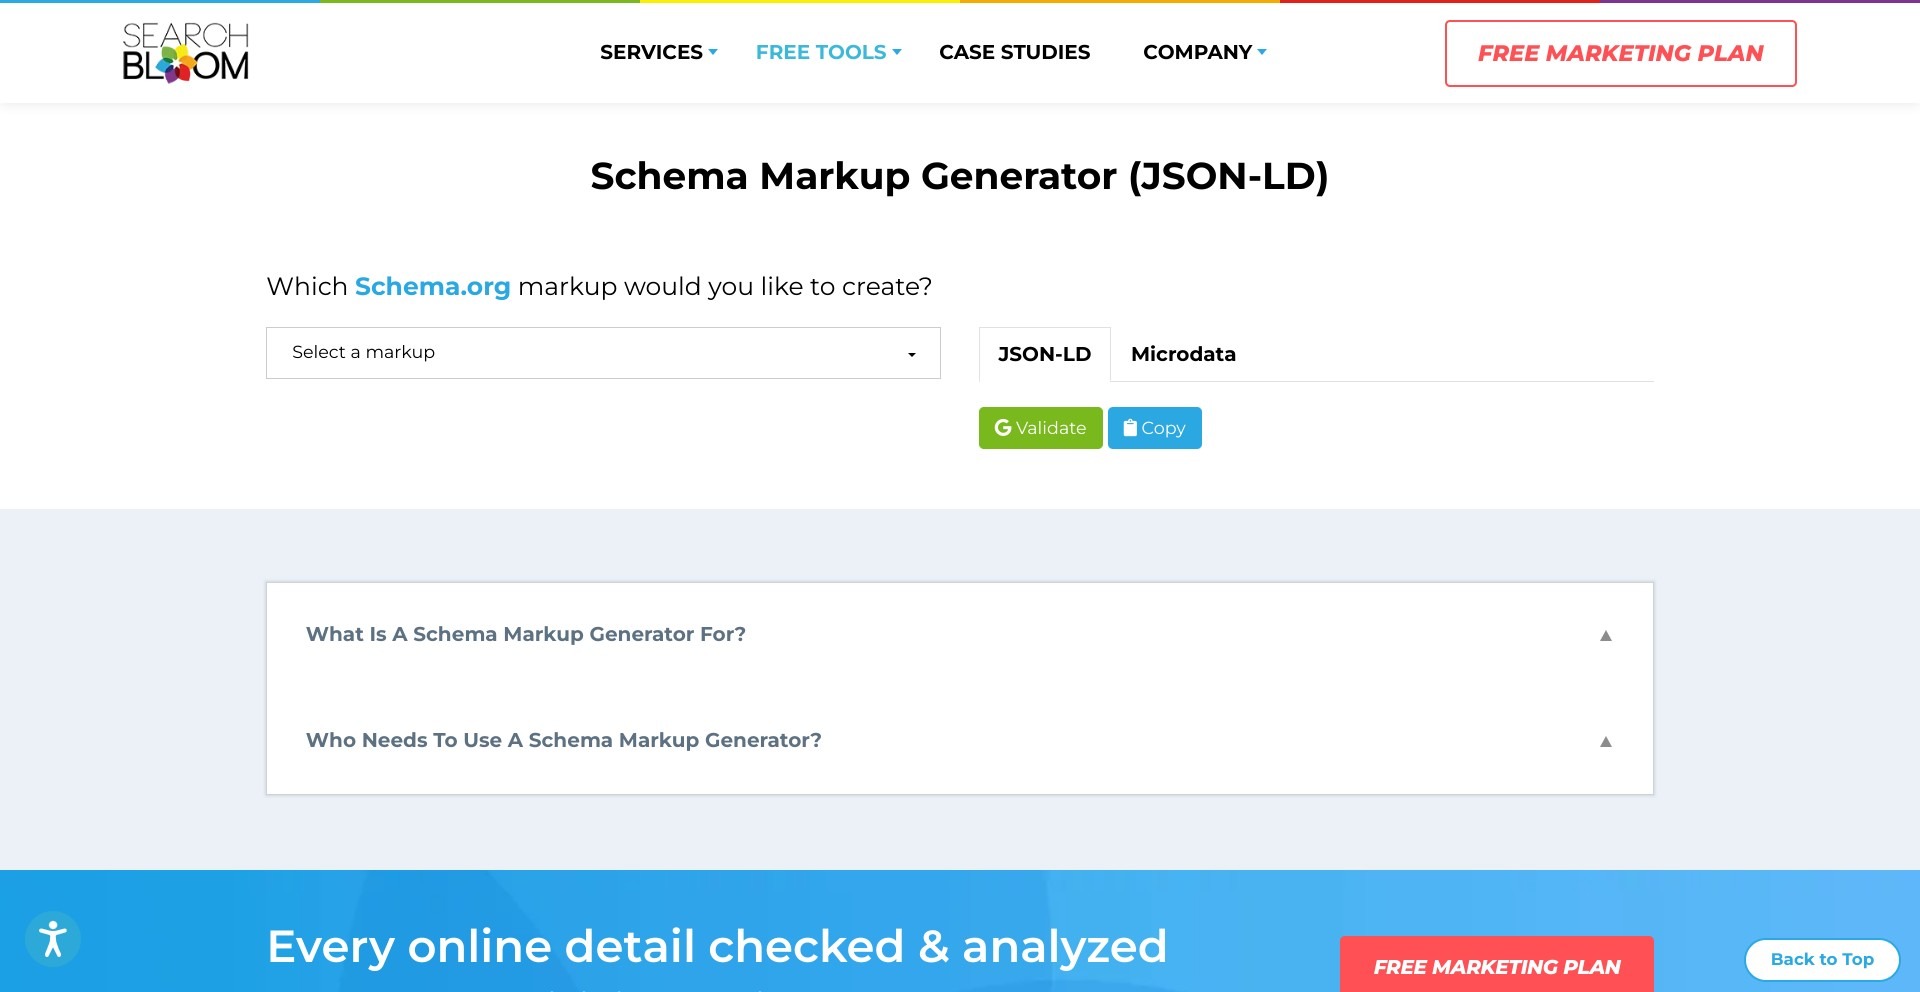 Search Bloom Schema Markup Generator